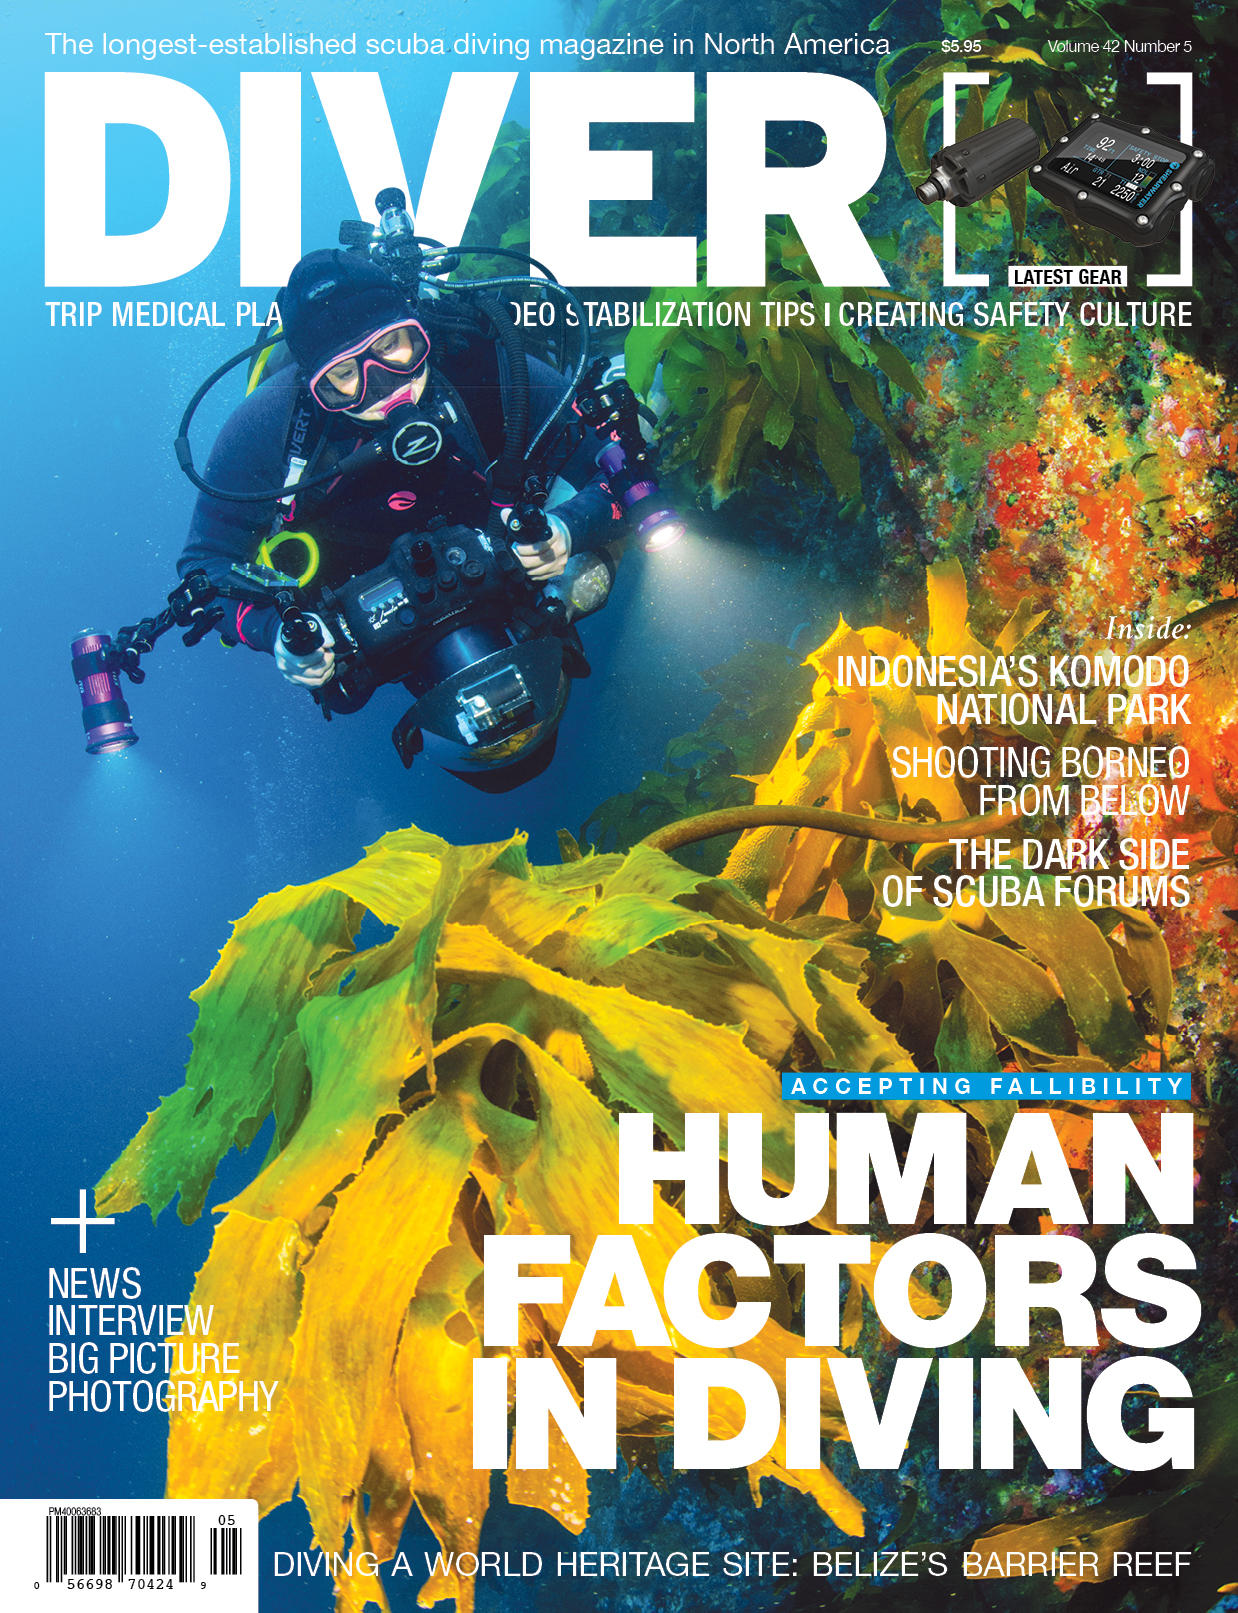 Human Factor Article Diver Magazine